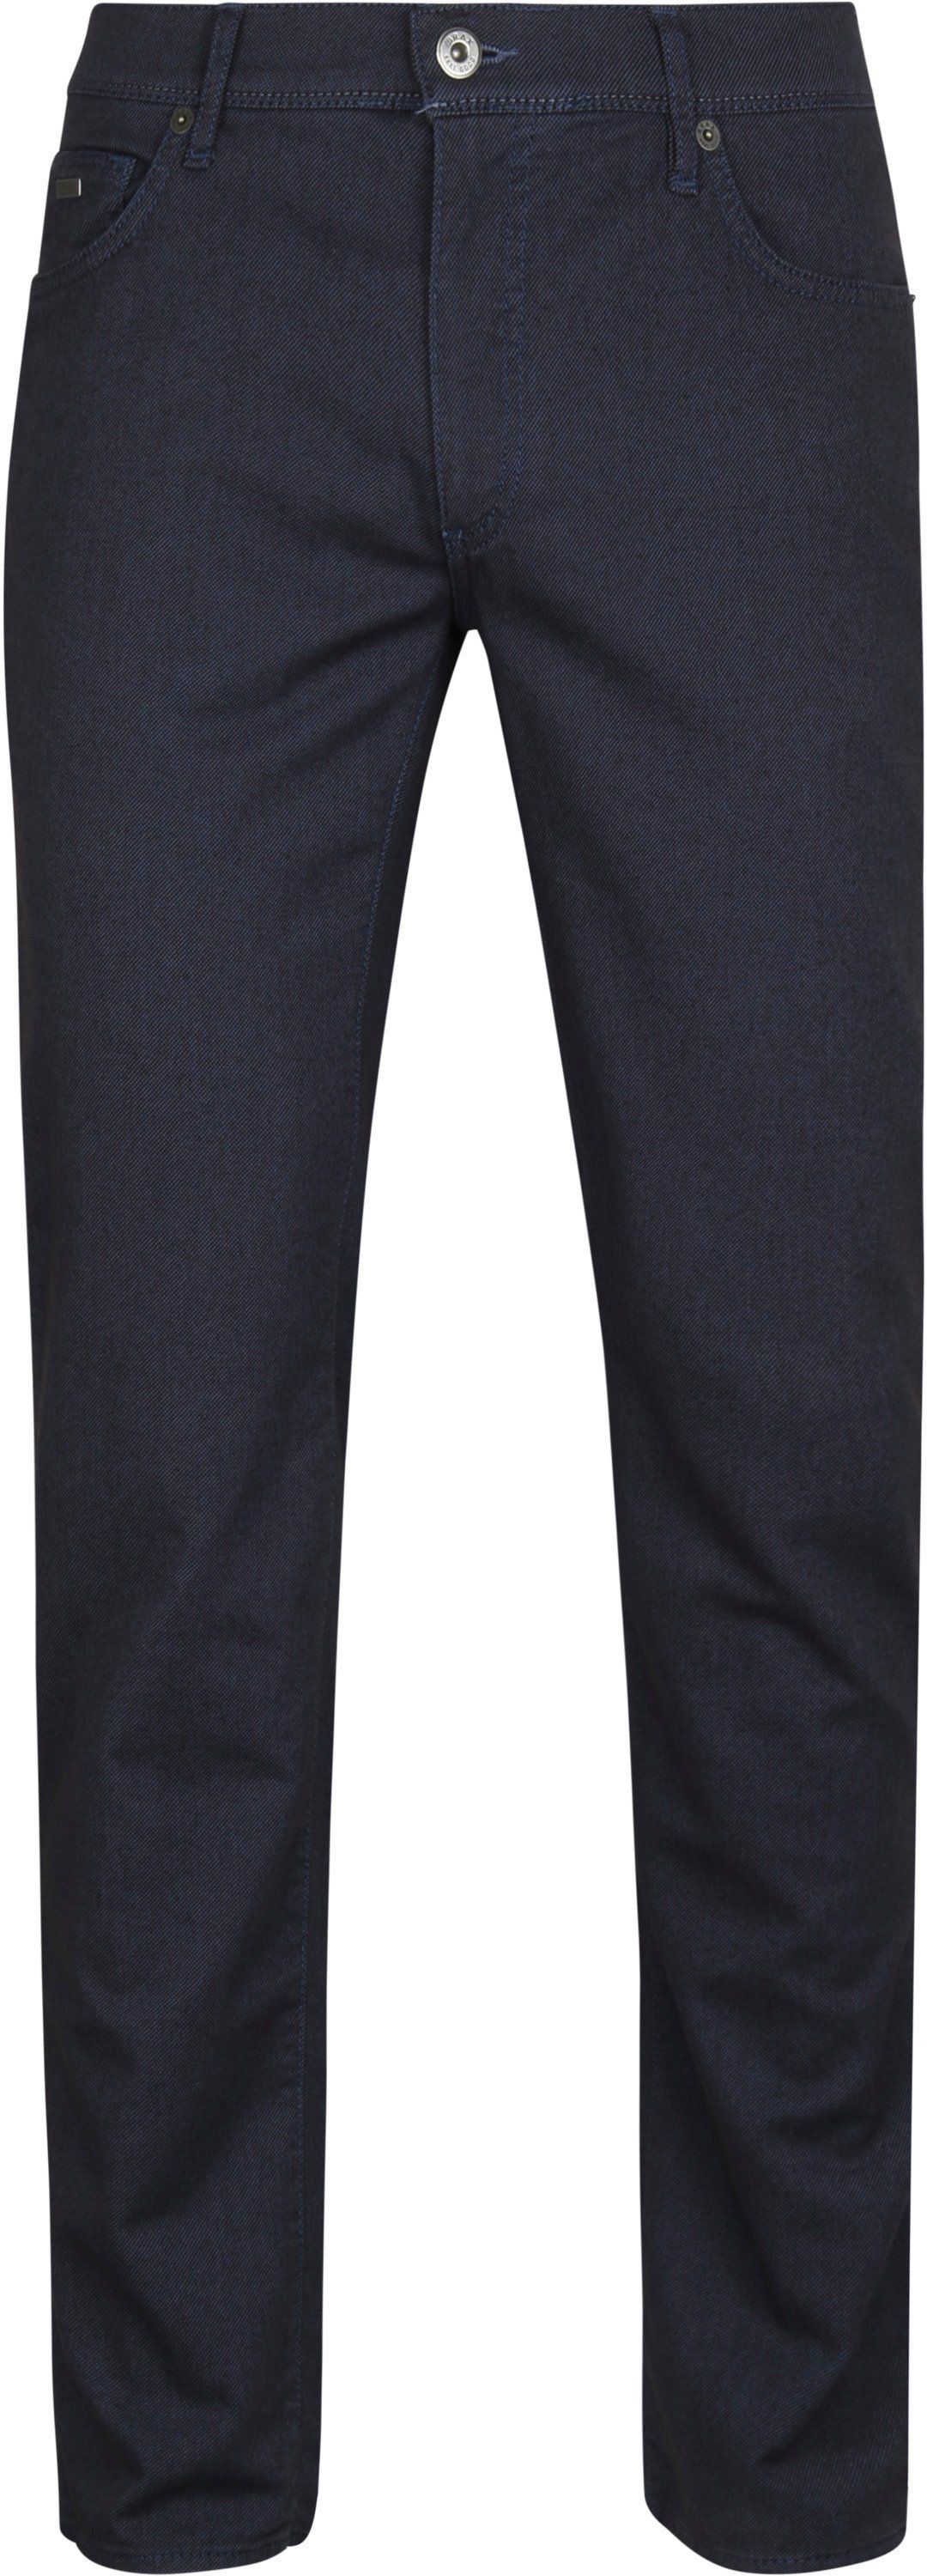 Brax Cadiz Pants Five Pocket Navy Dark Blue size W 32